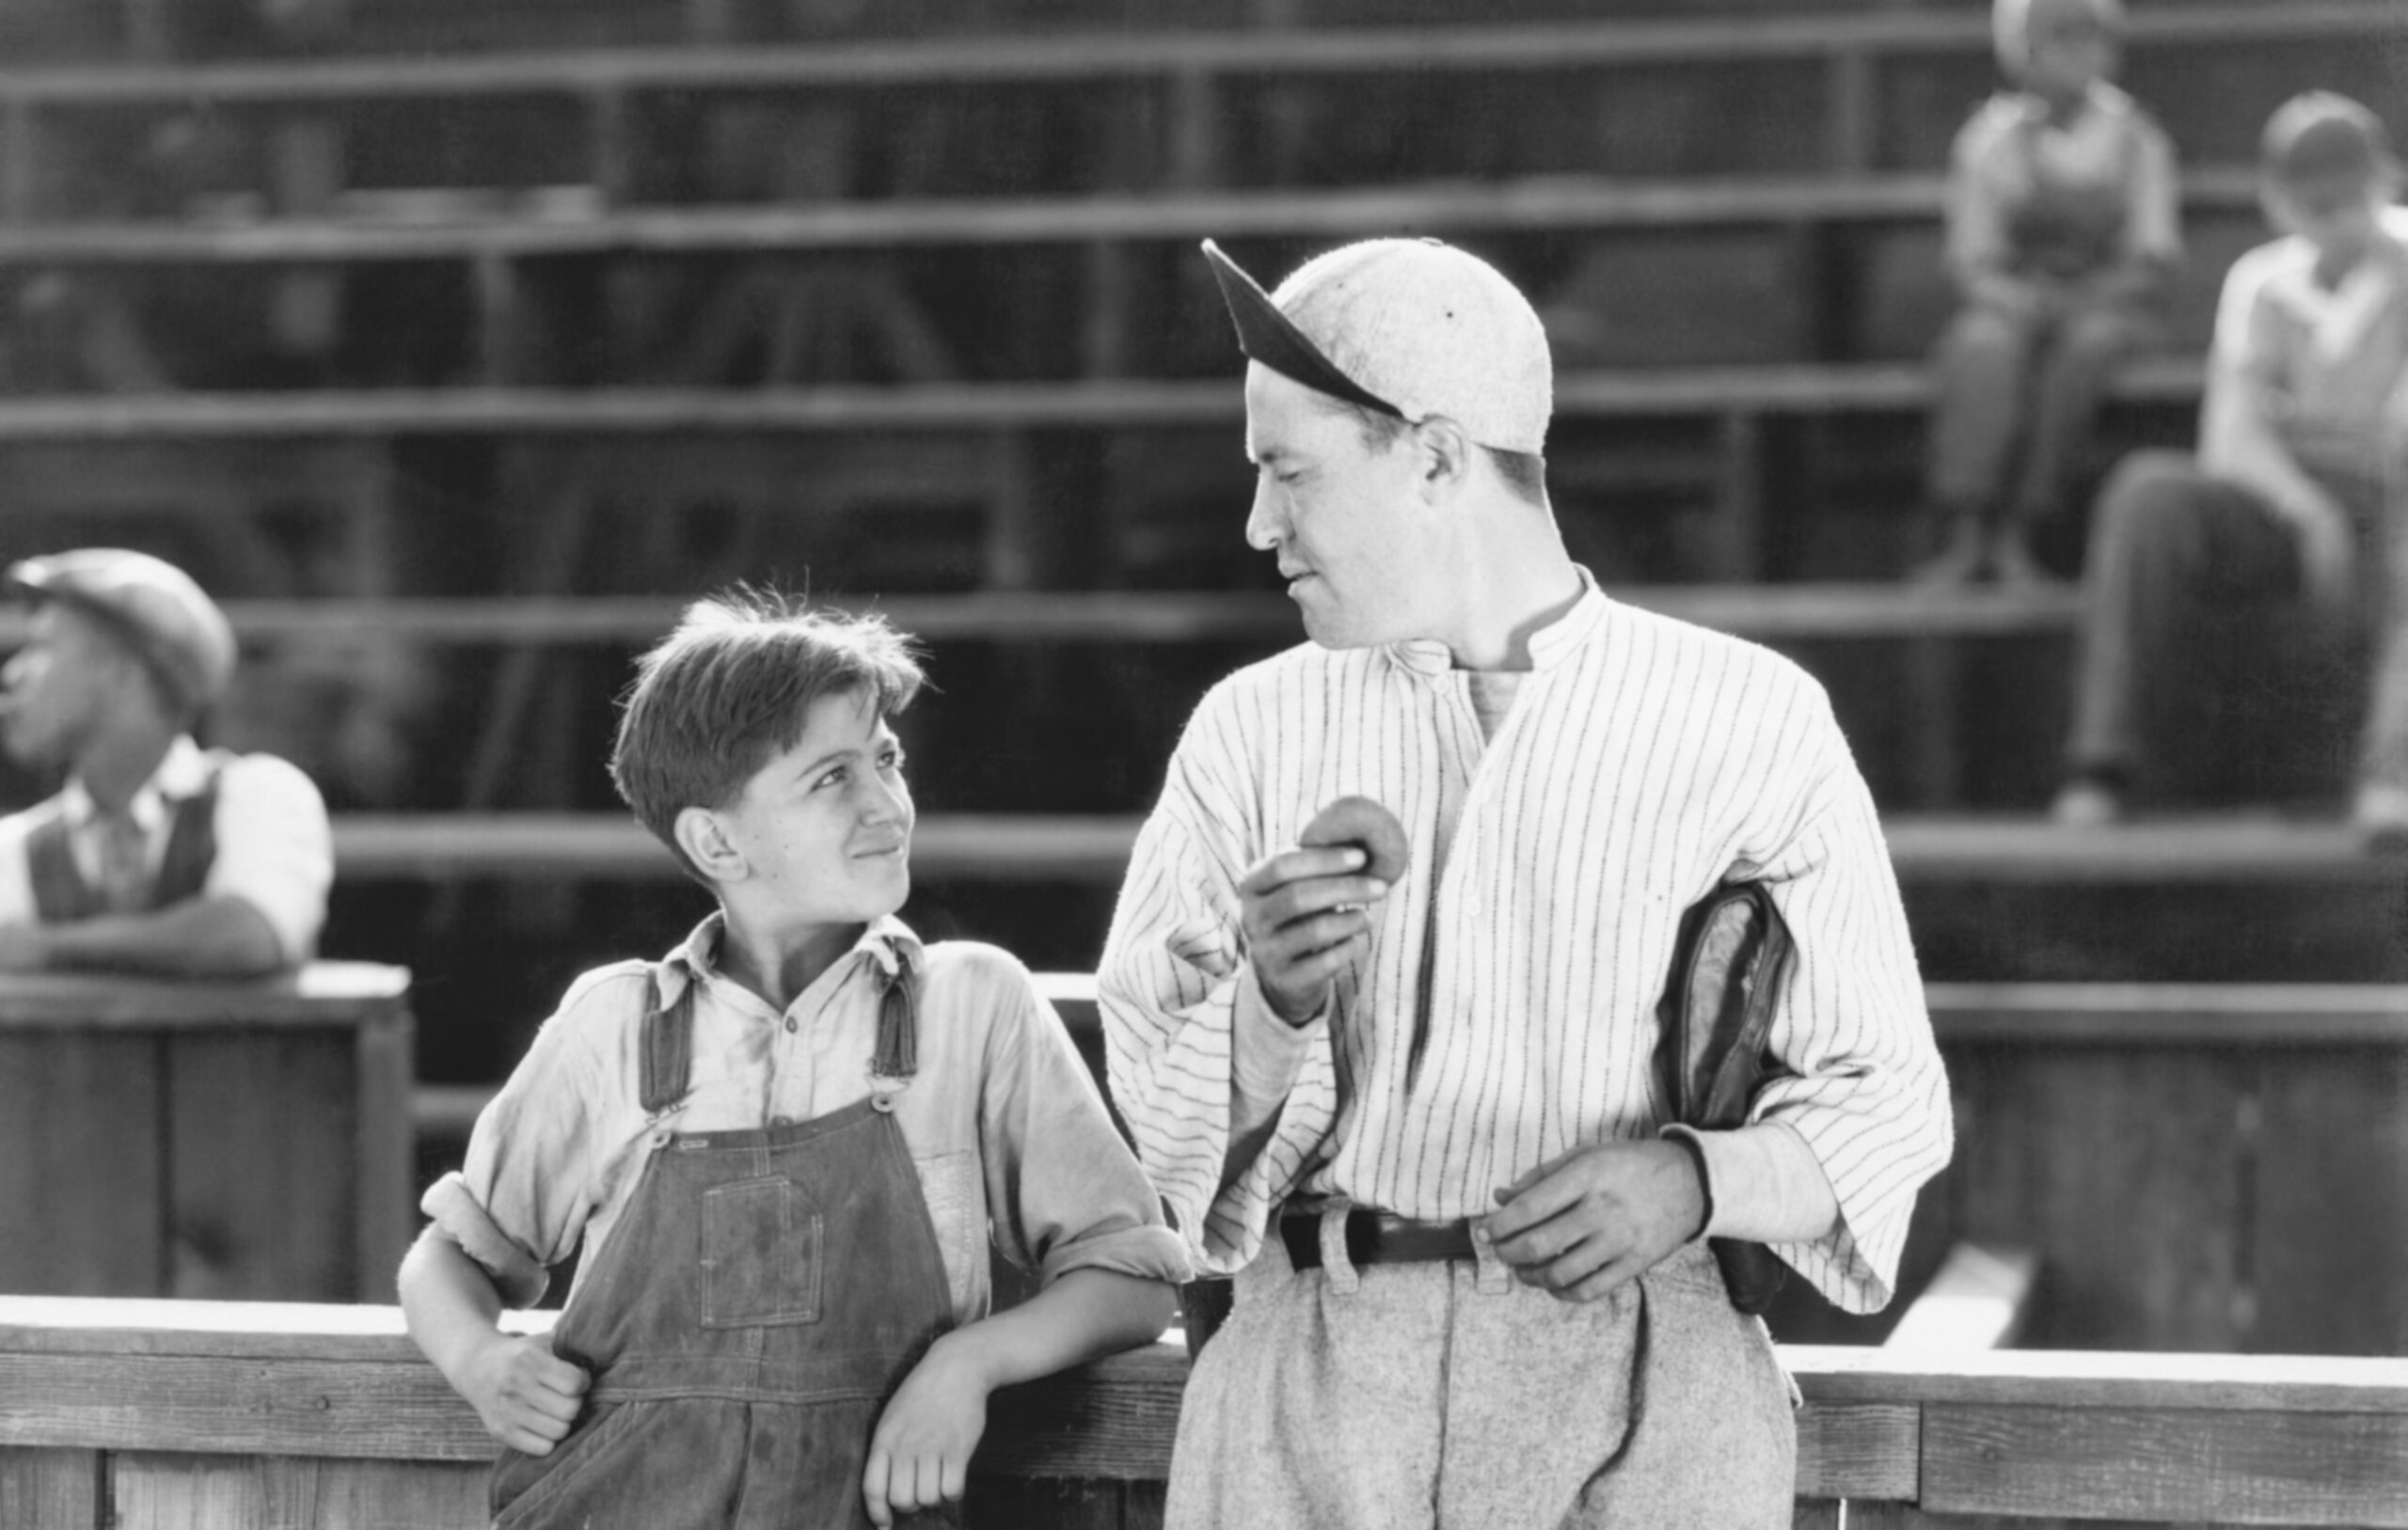 Older photograph of a man at a baseball, mentoring a boy